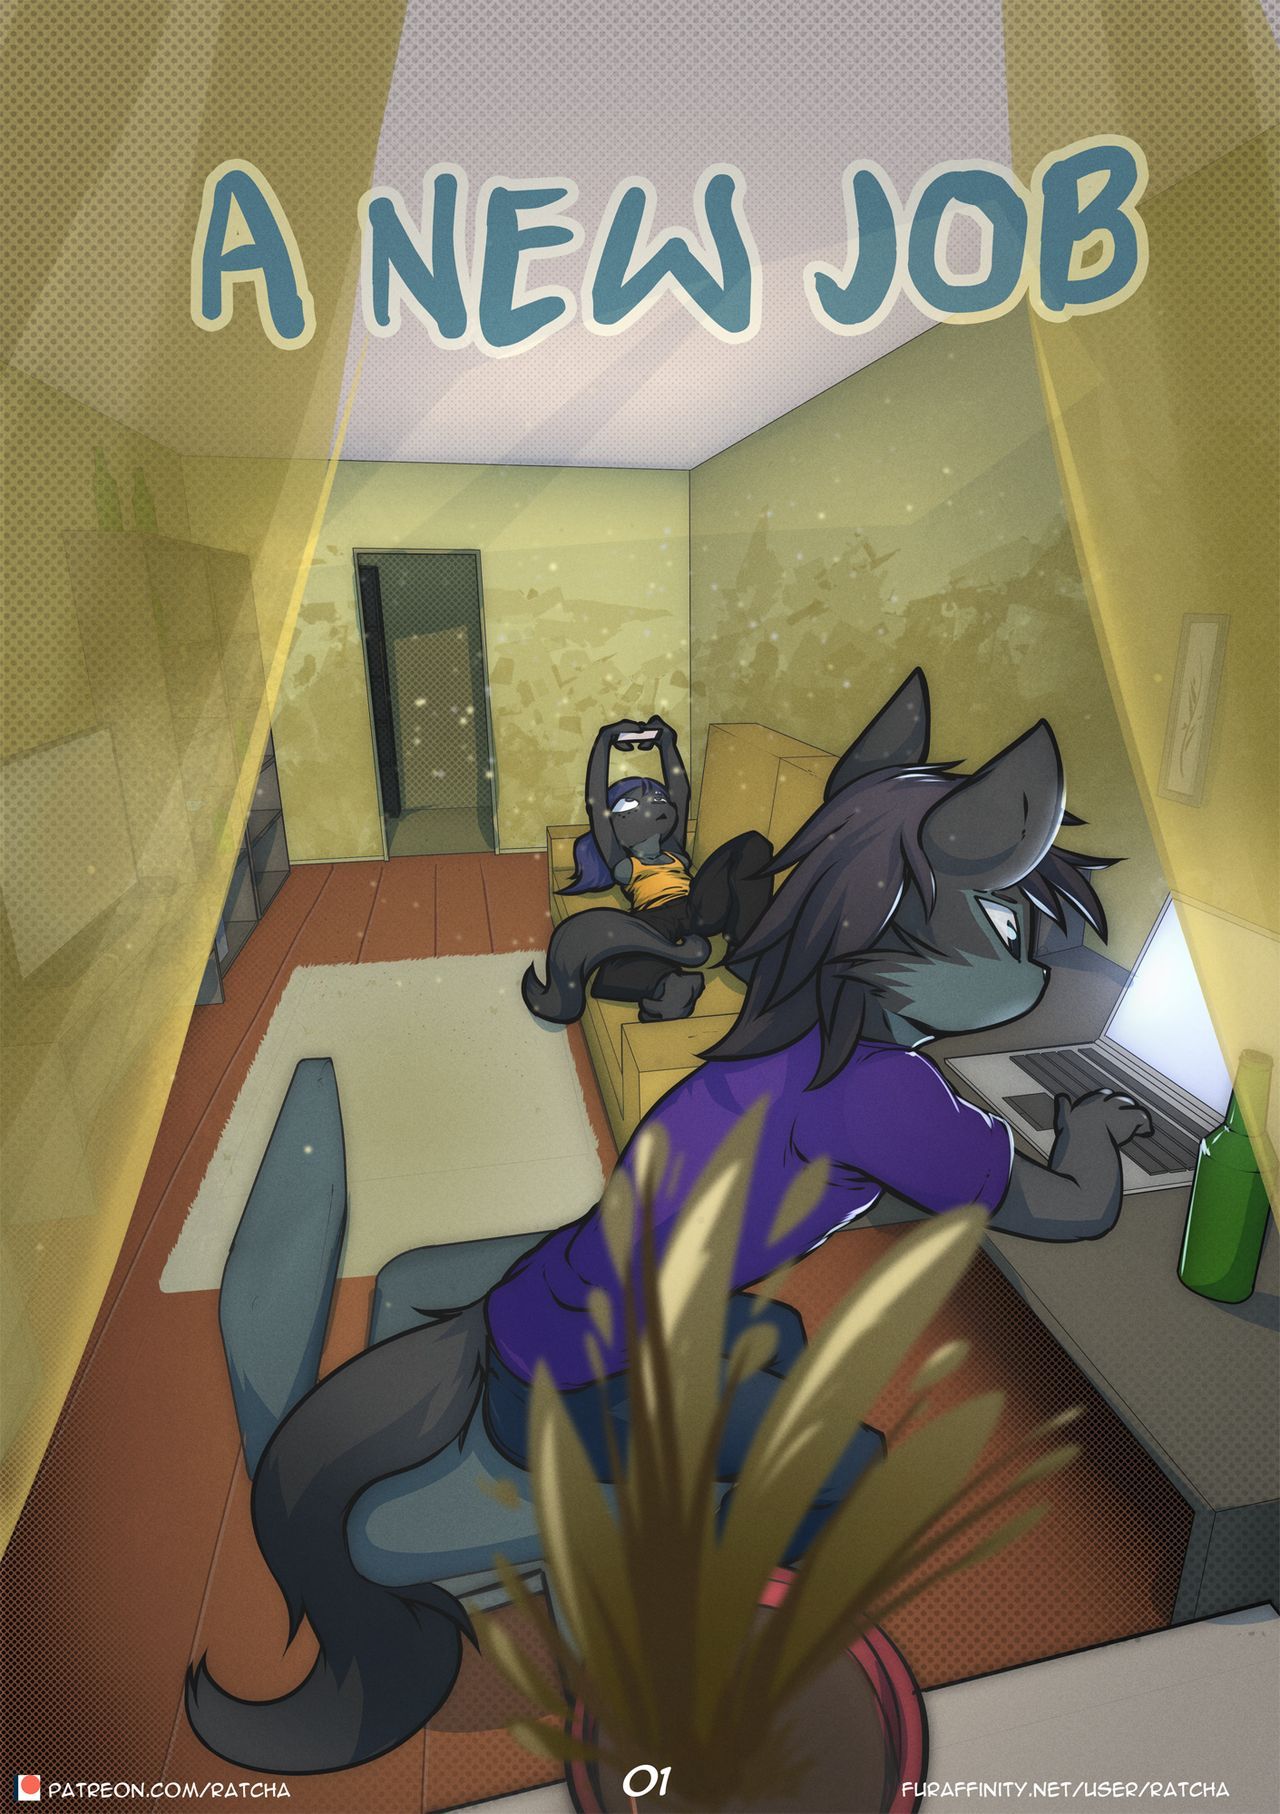 [Ratcha] A New Job (updated 11-15-17) 1